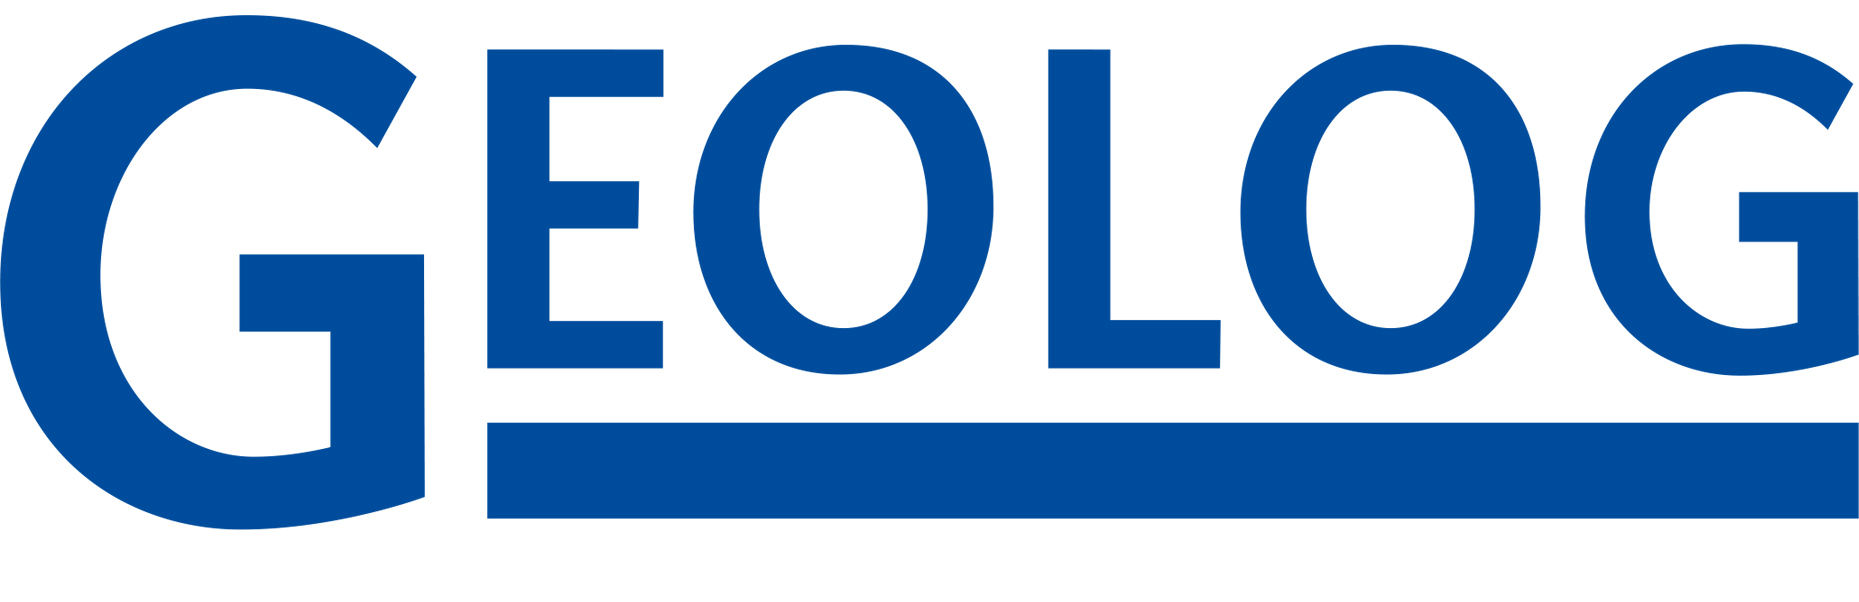 geolog_logo (1)